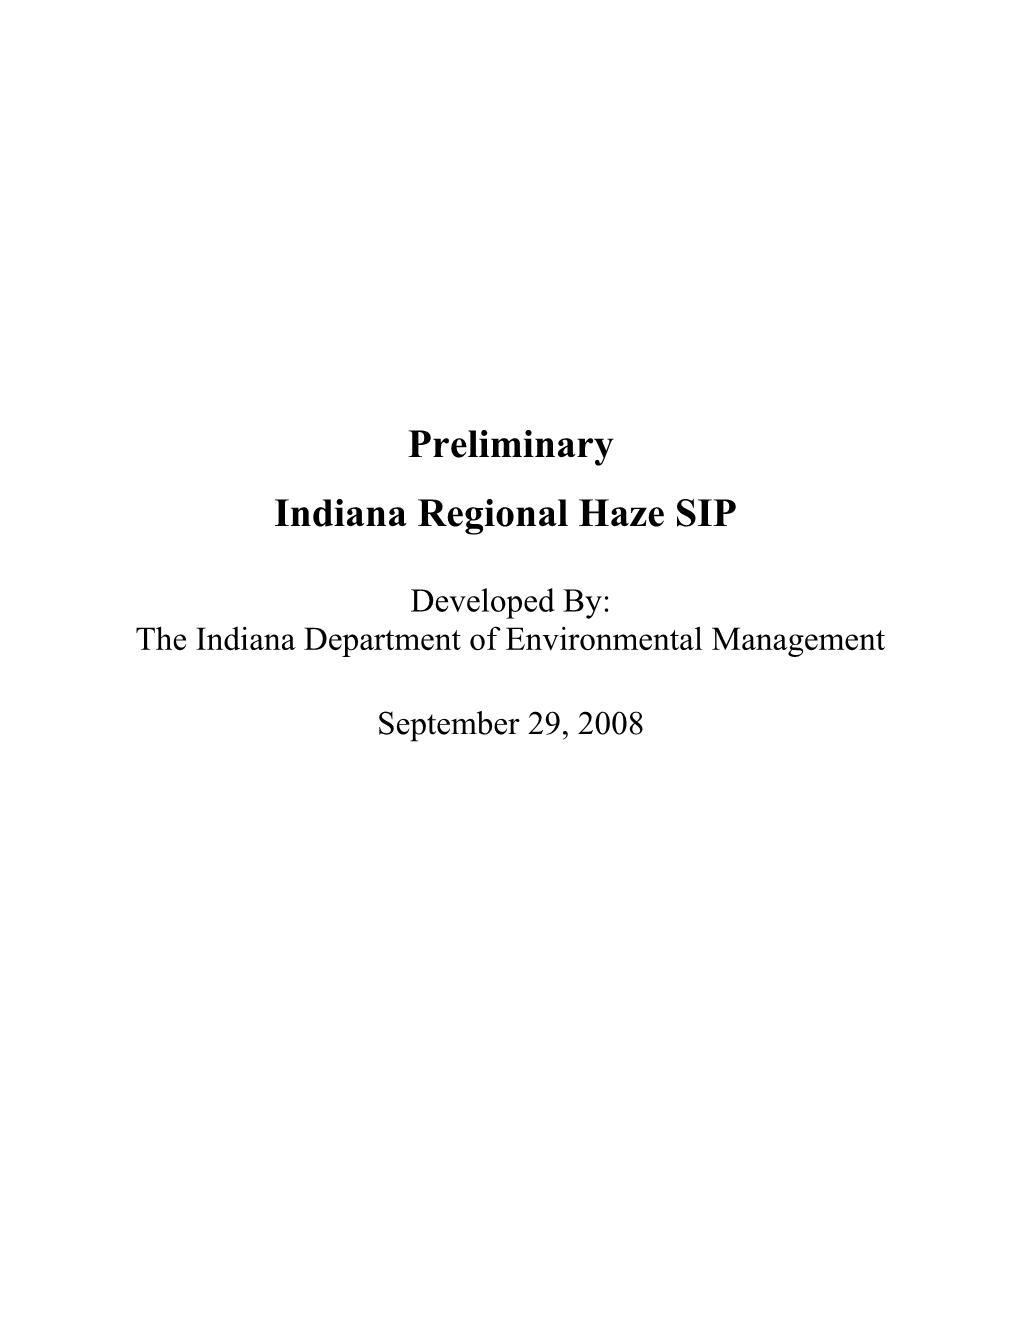 Indiana Regional Haze SIP Draft